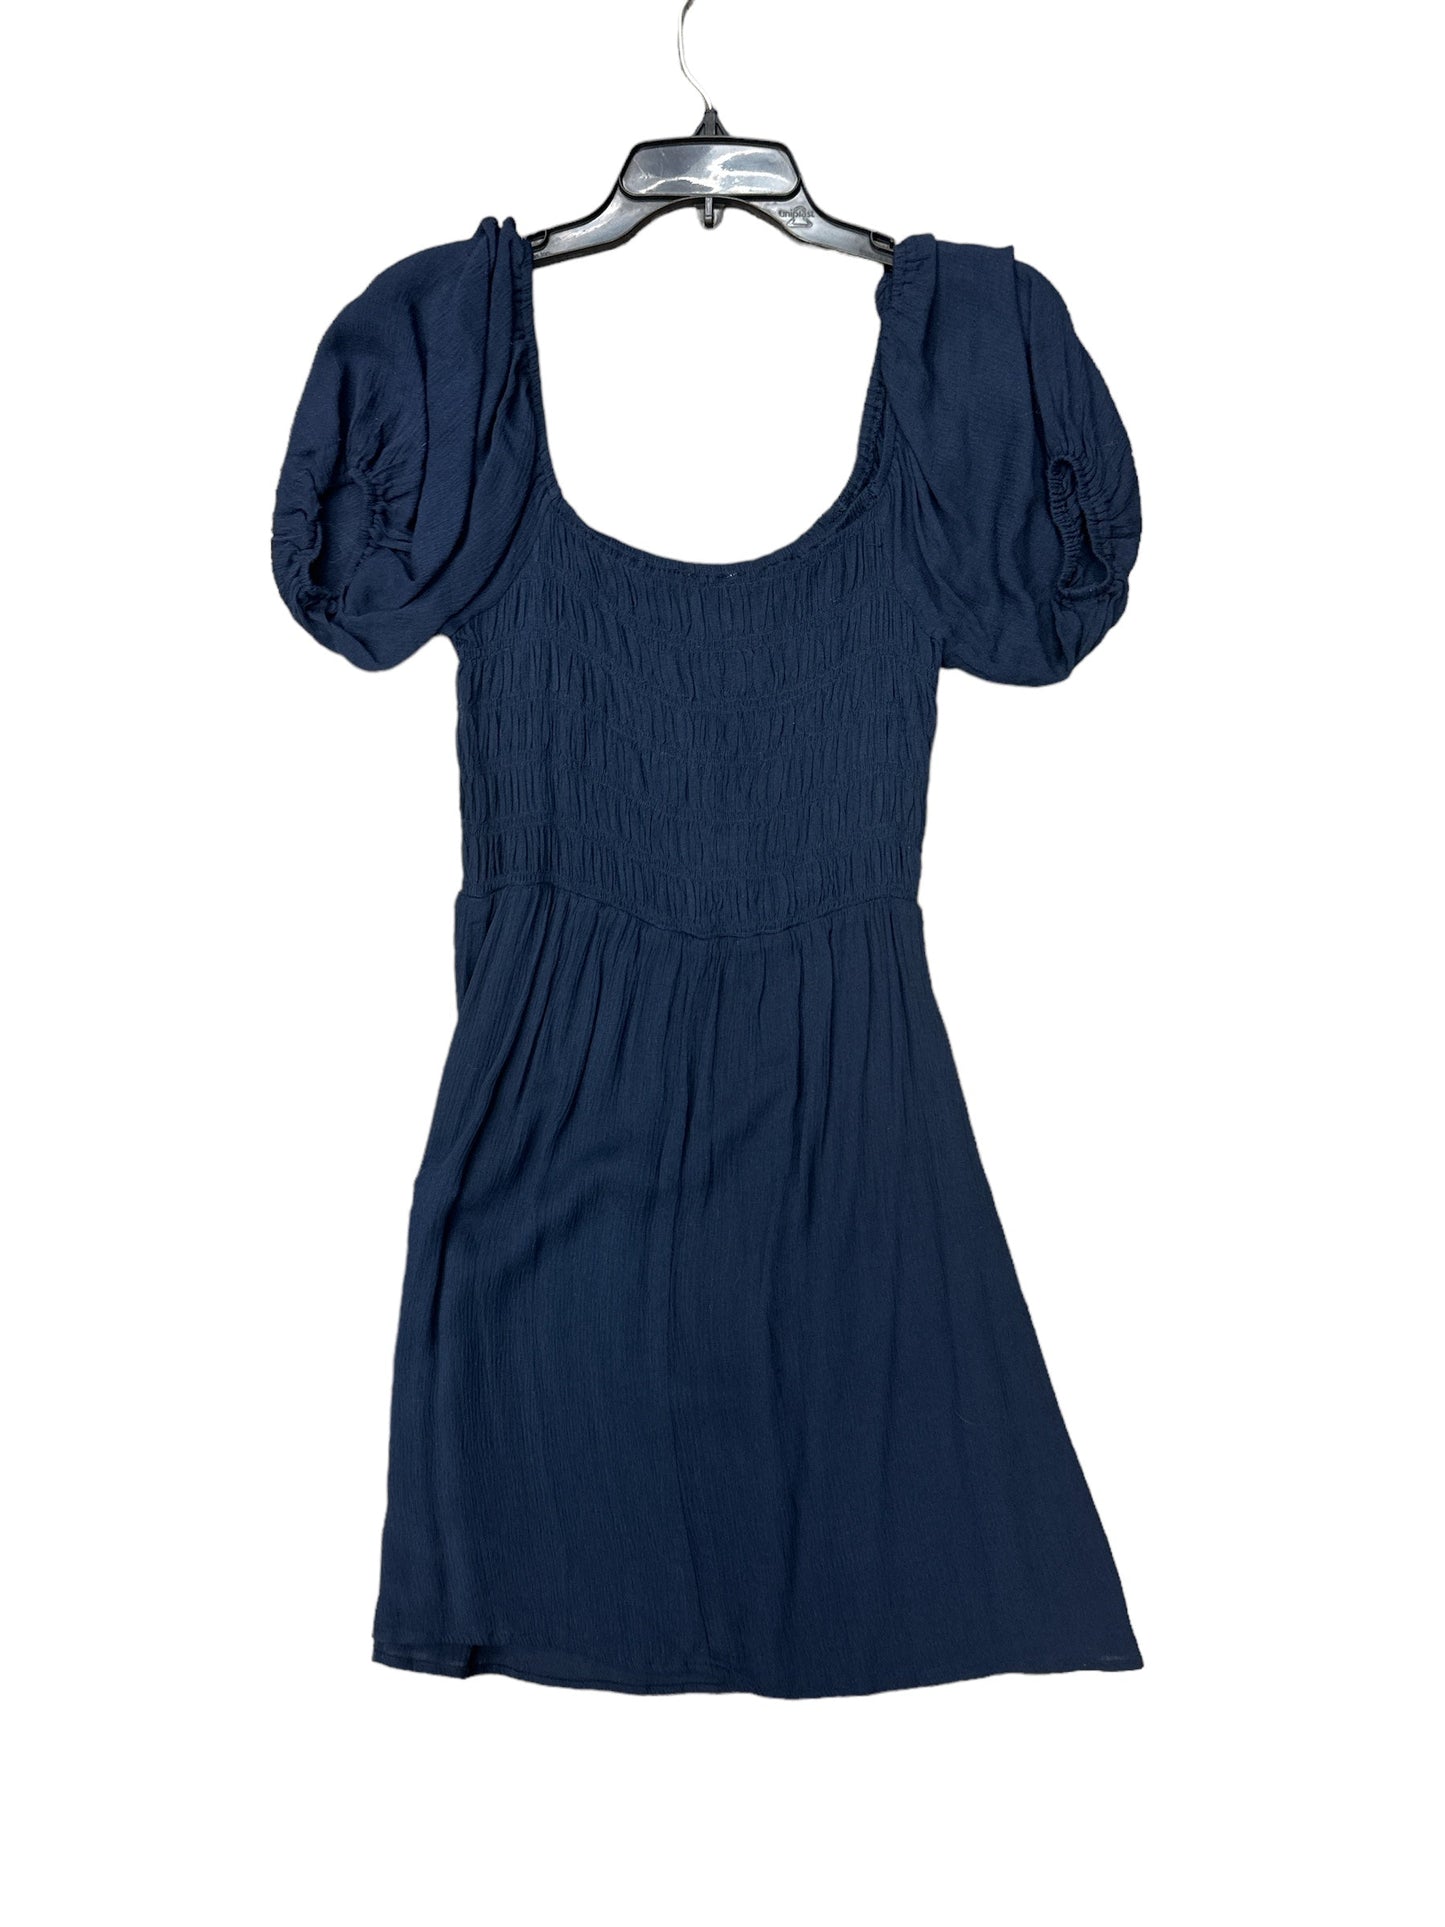 Dress Casual Short By Blue Rain  Size: 8